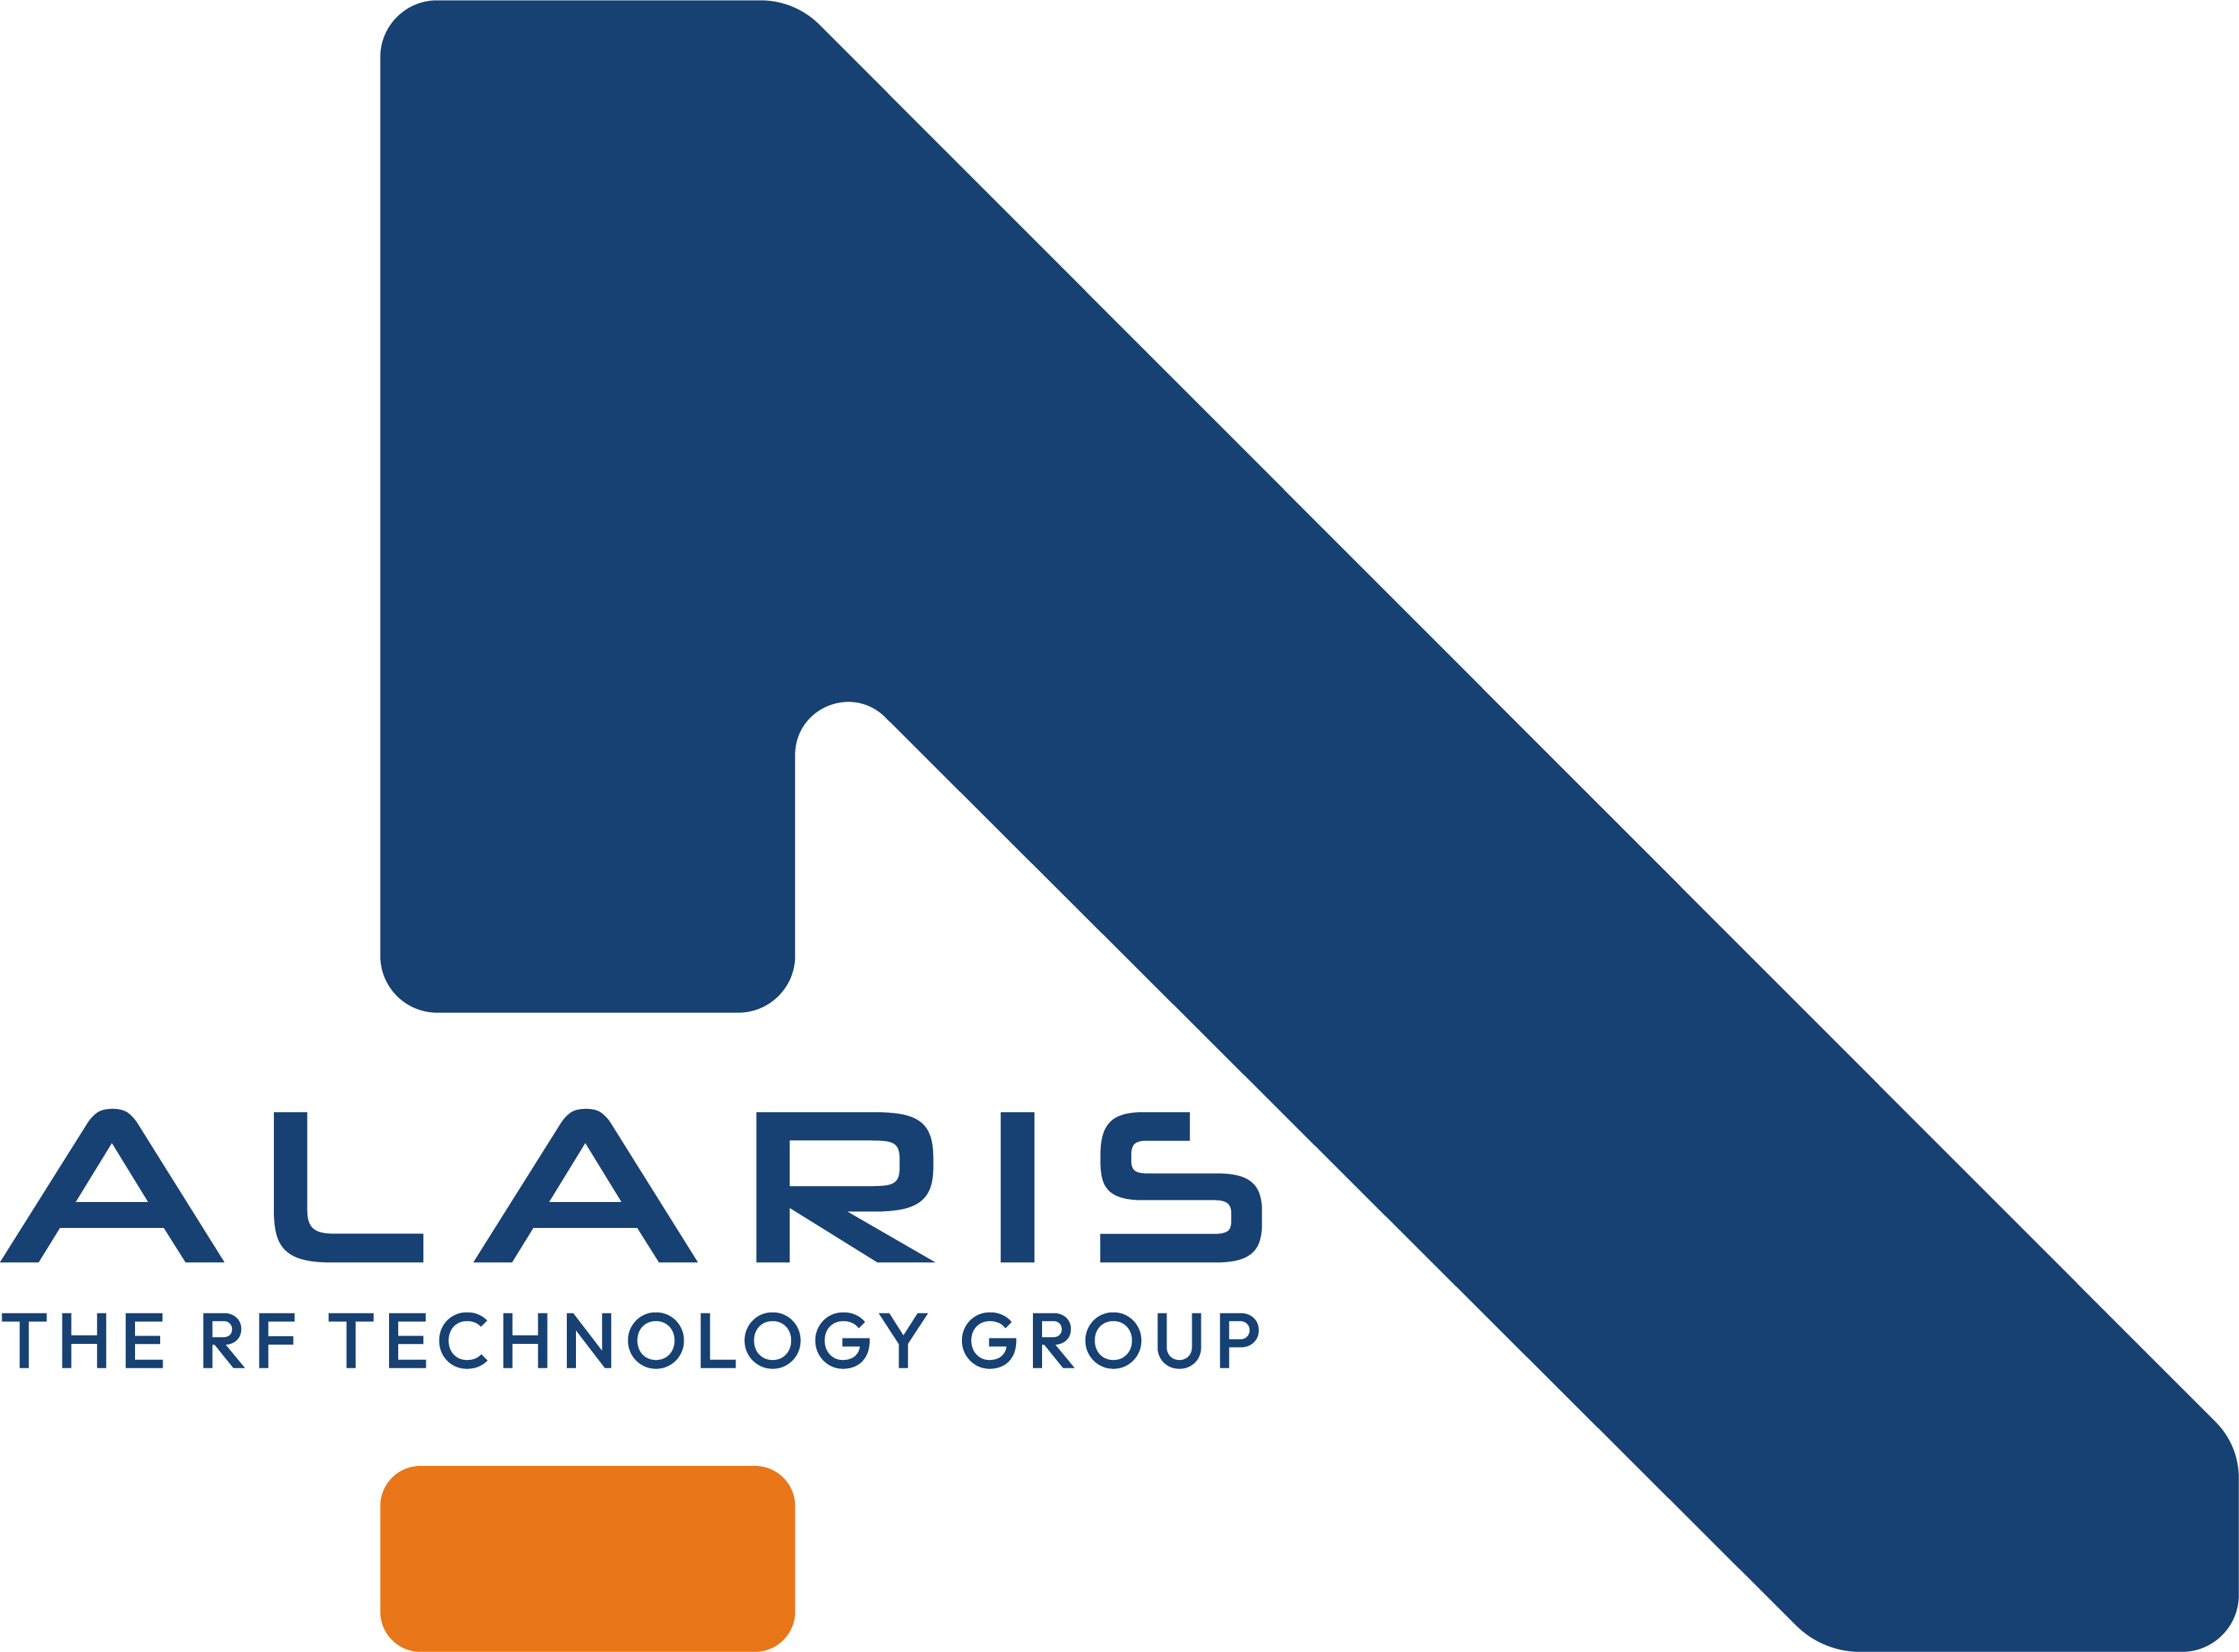 ALARIS - THE RF TECHNOLOGY GROUP